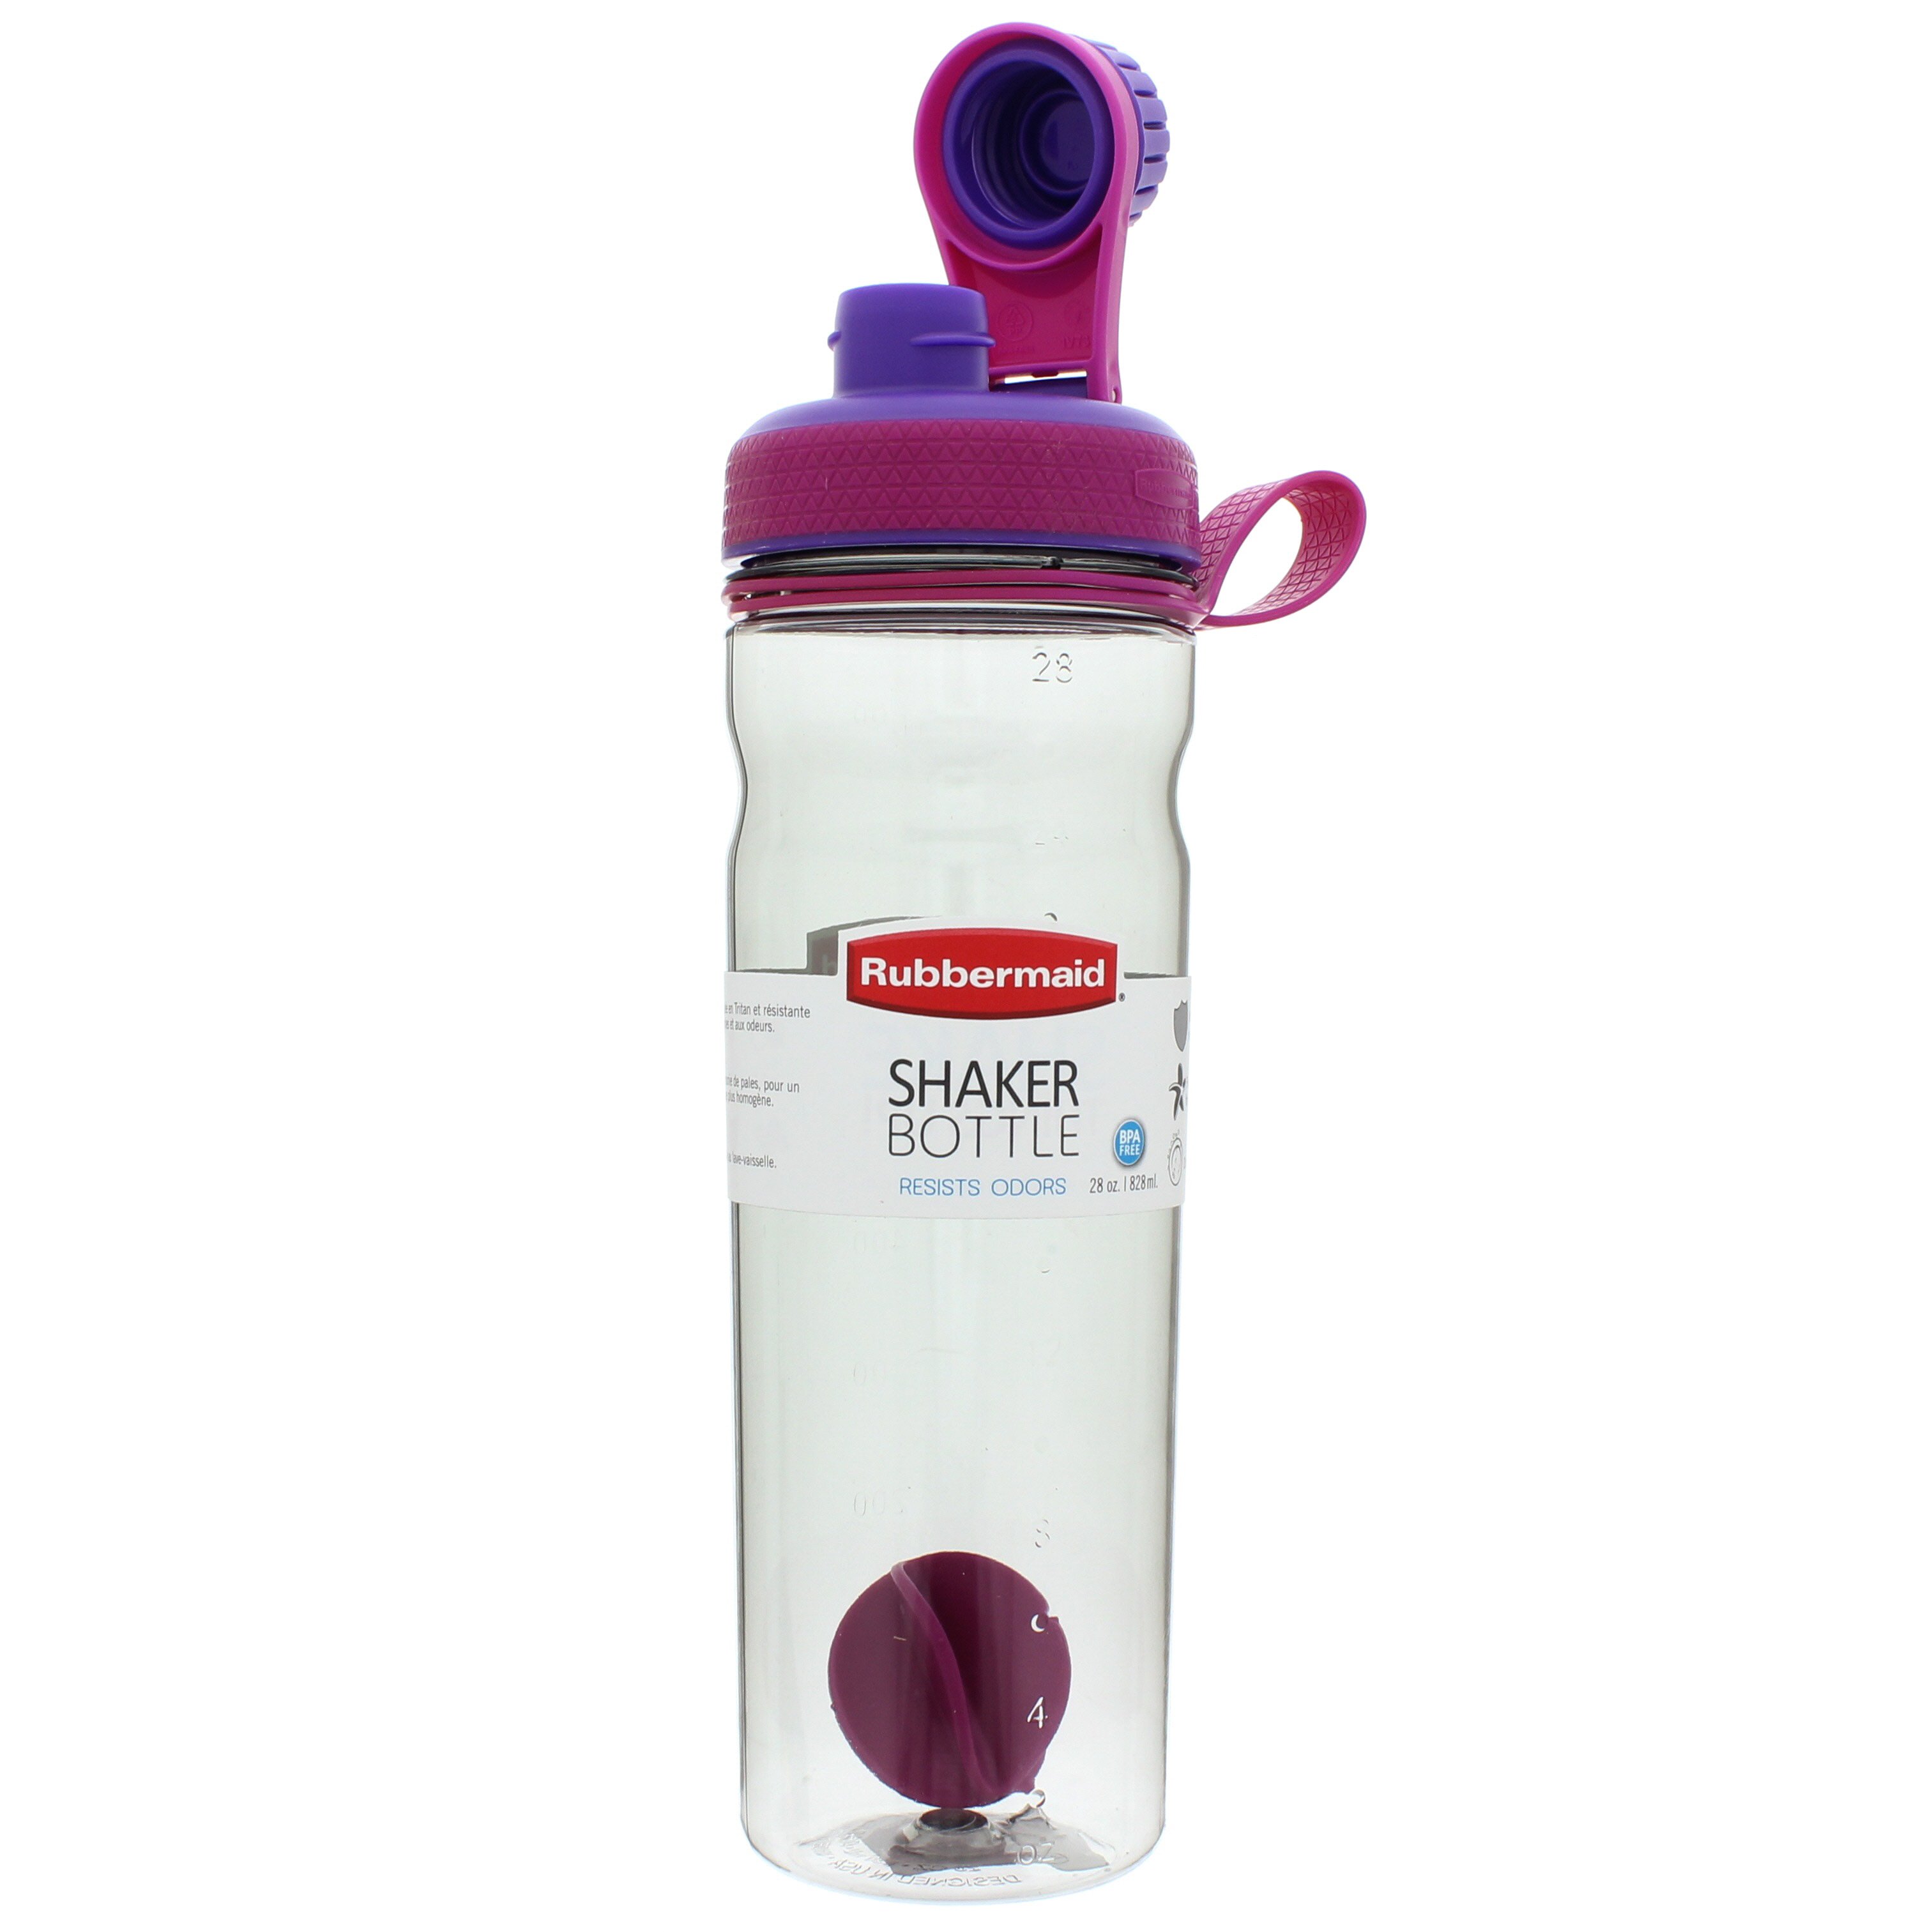 [4 Pack] 20 oz Shaker Bottle | 4-Pack with Mixing Agitators (Light Blue,  Lavender, Teal/Mint, Raspbe…See more [4 Pack] 20 oz Shaker Bottle | 4-Pack